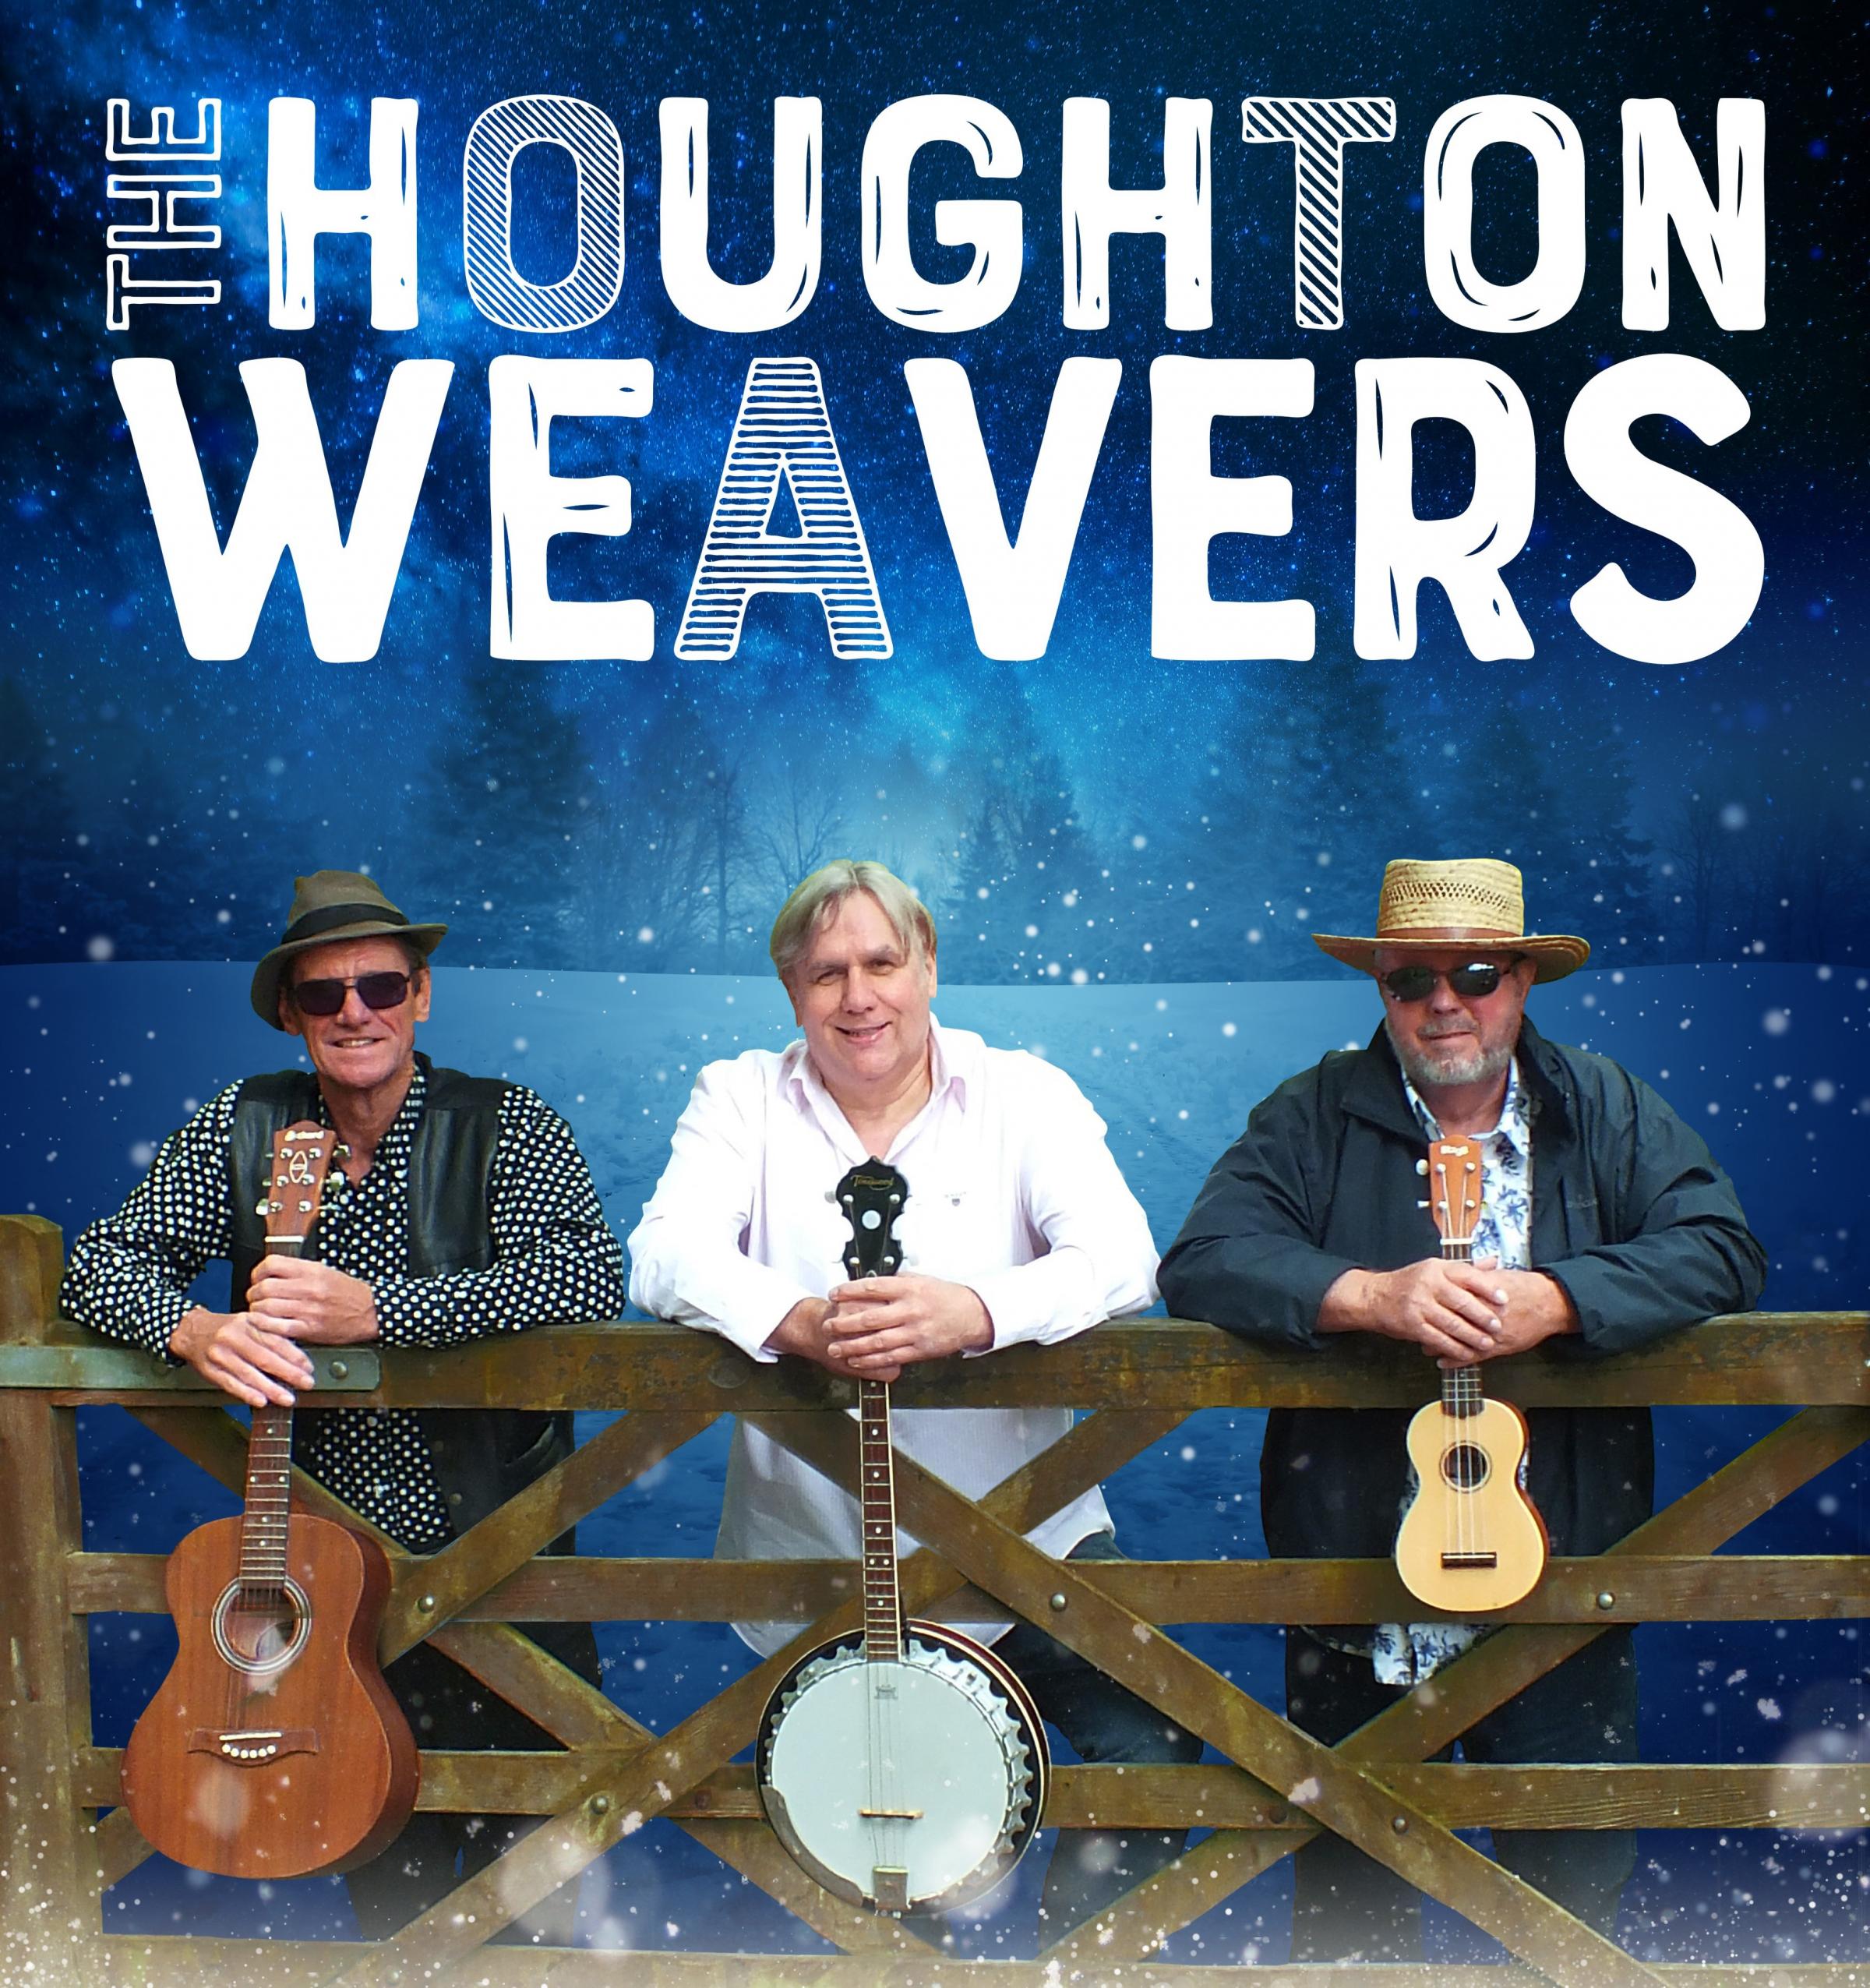 The Houghton Weavers.